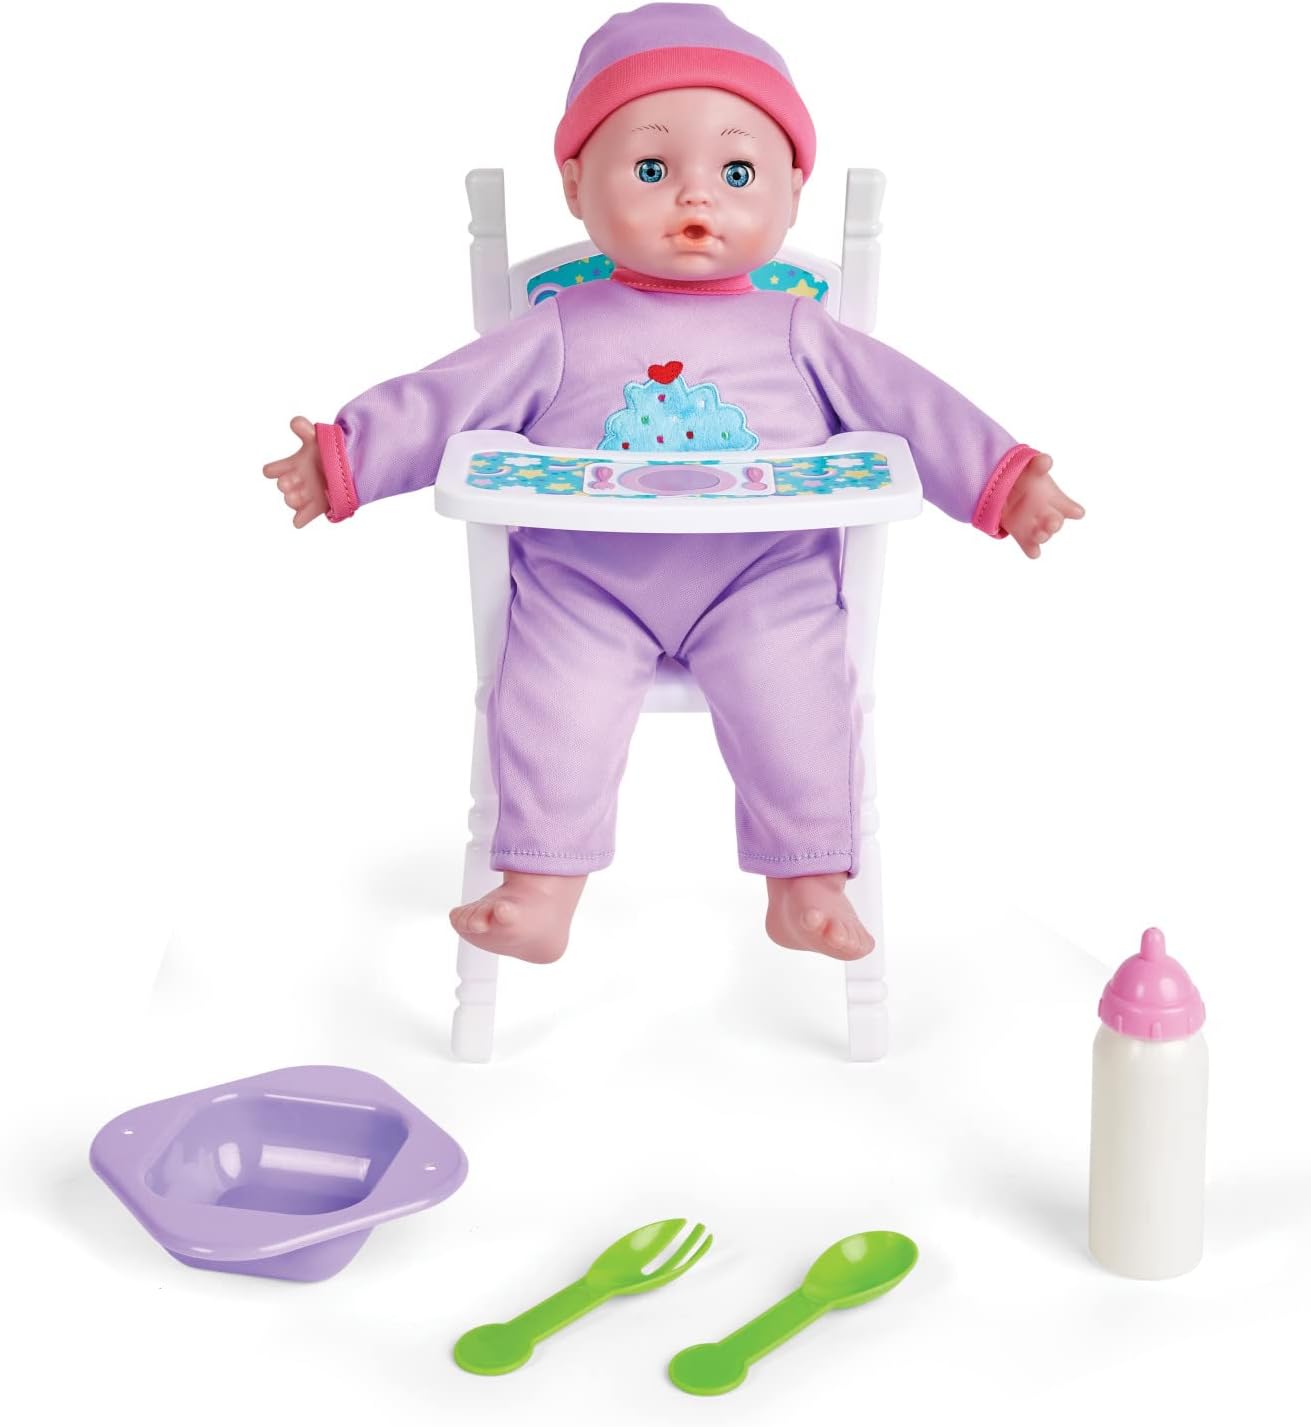 Kidoozie Mealtime Baby Playset